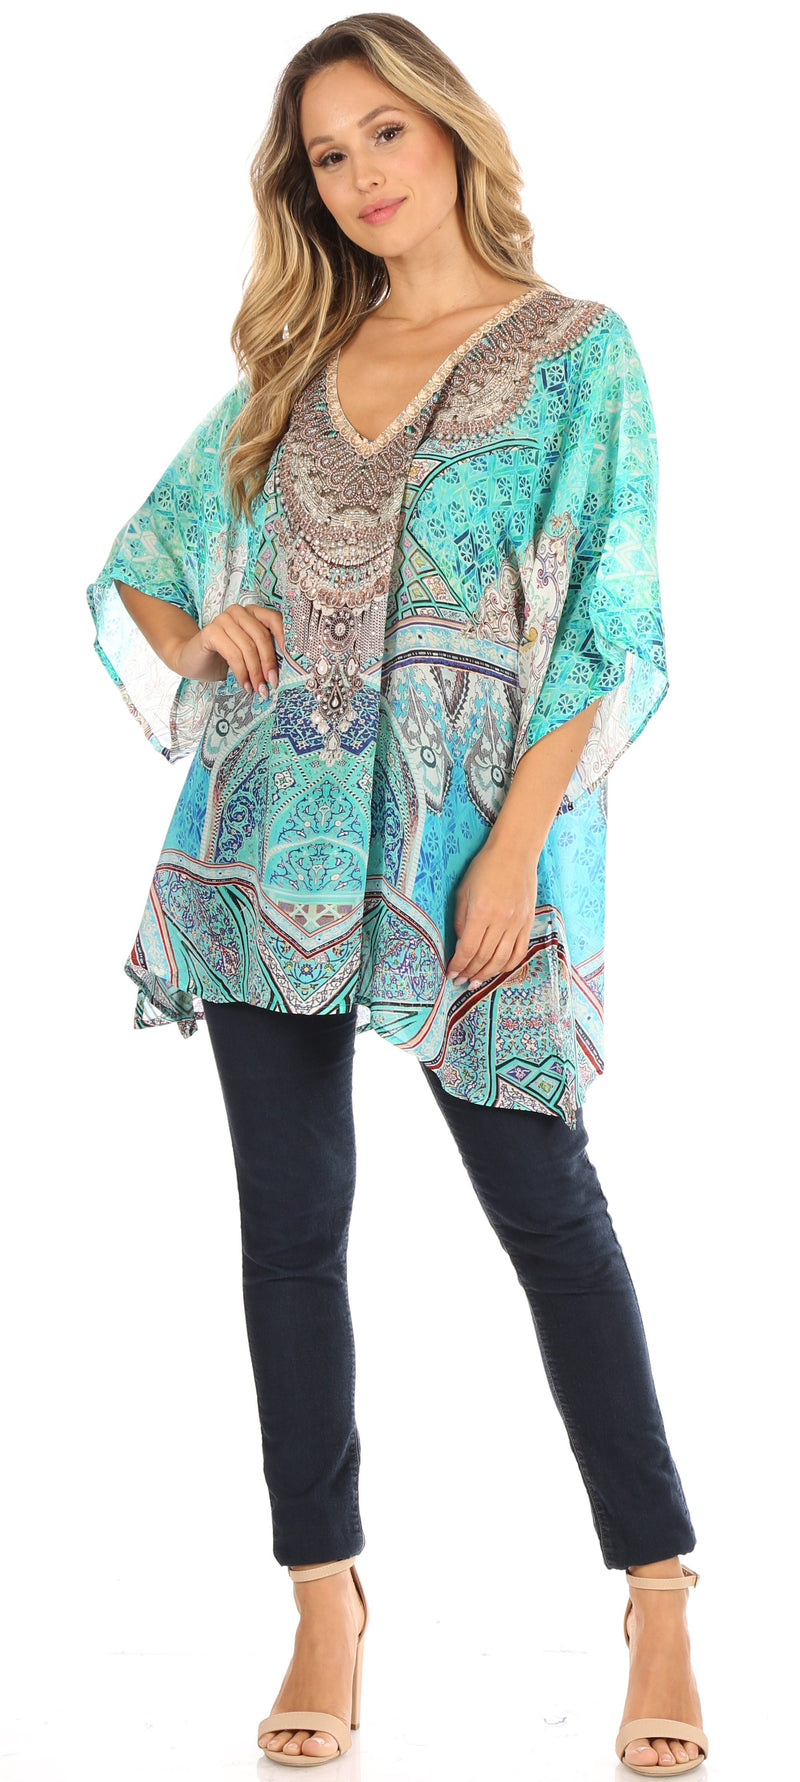 Sakkas Tanya Women's Short Sleeve Floral Print Loose Blouse Tunic V-neck Silky